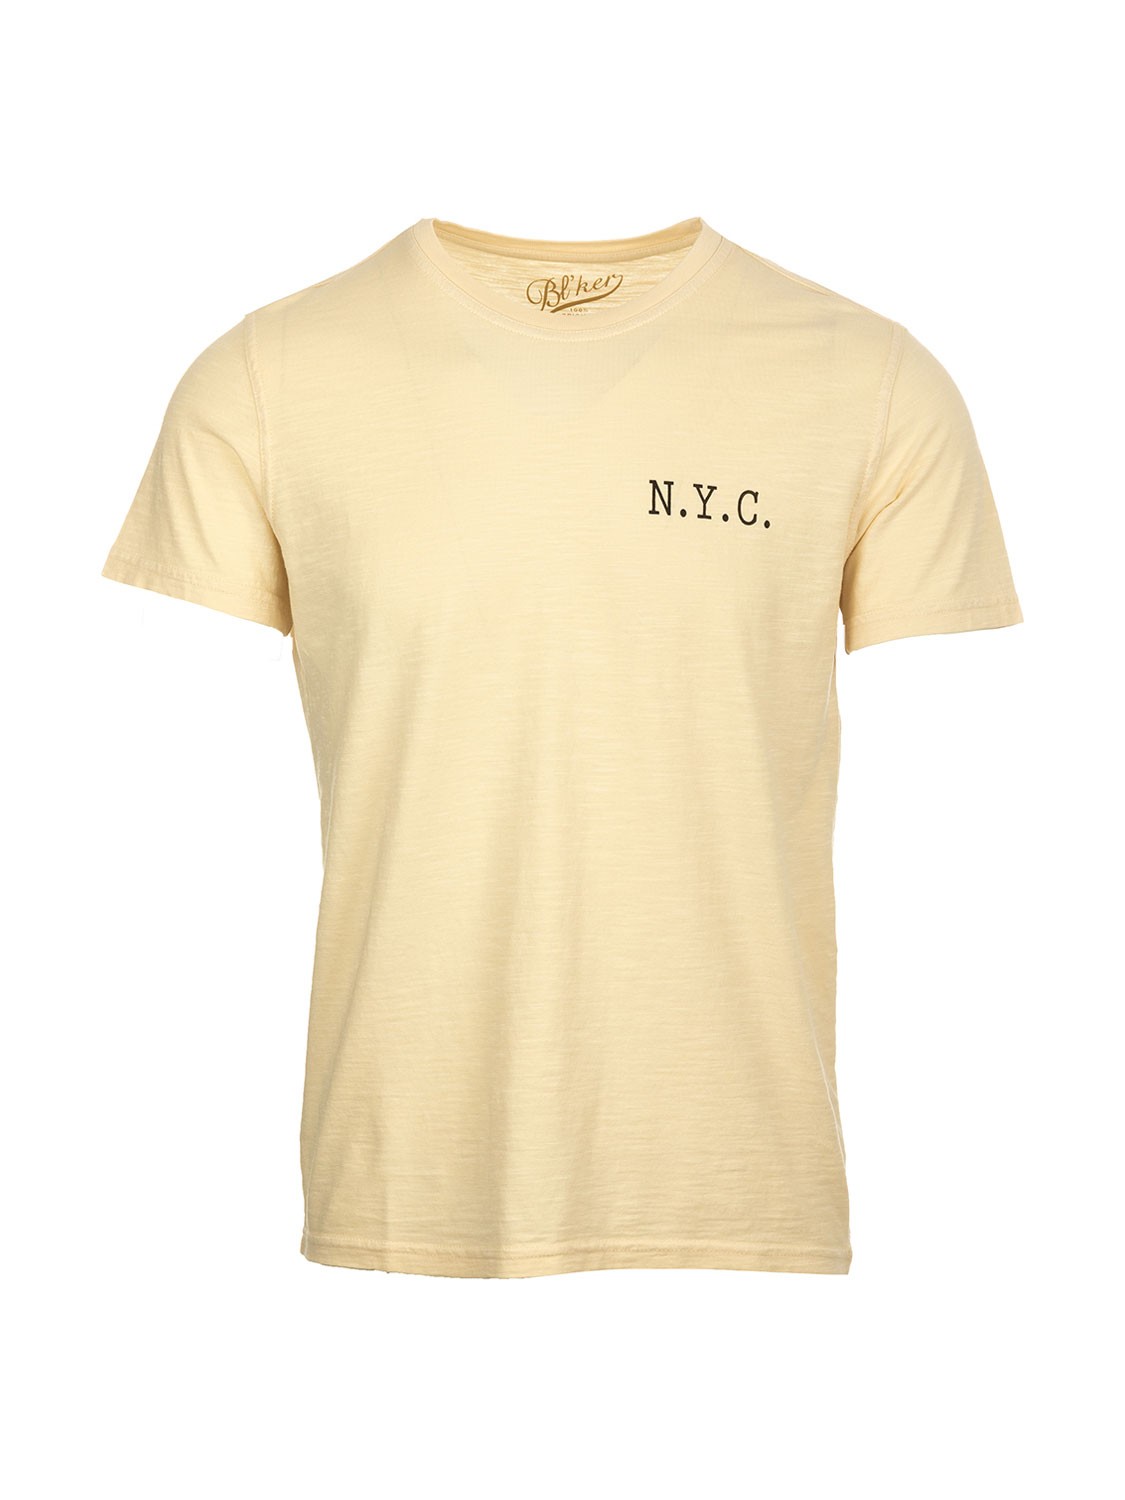 Bl'ker Men's T-shirt Graphic N.Y. City Map